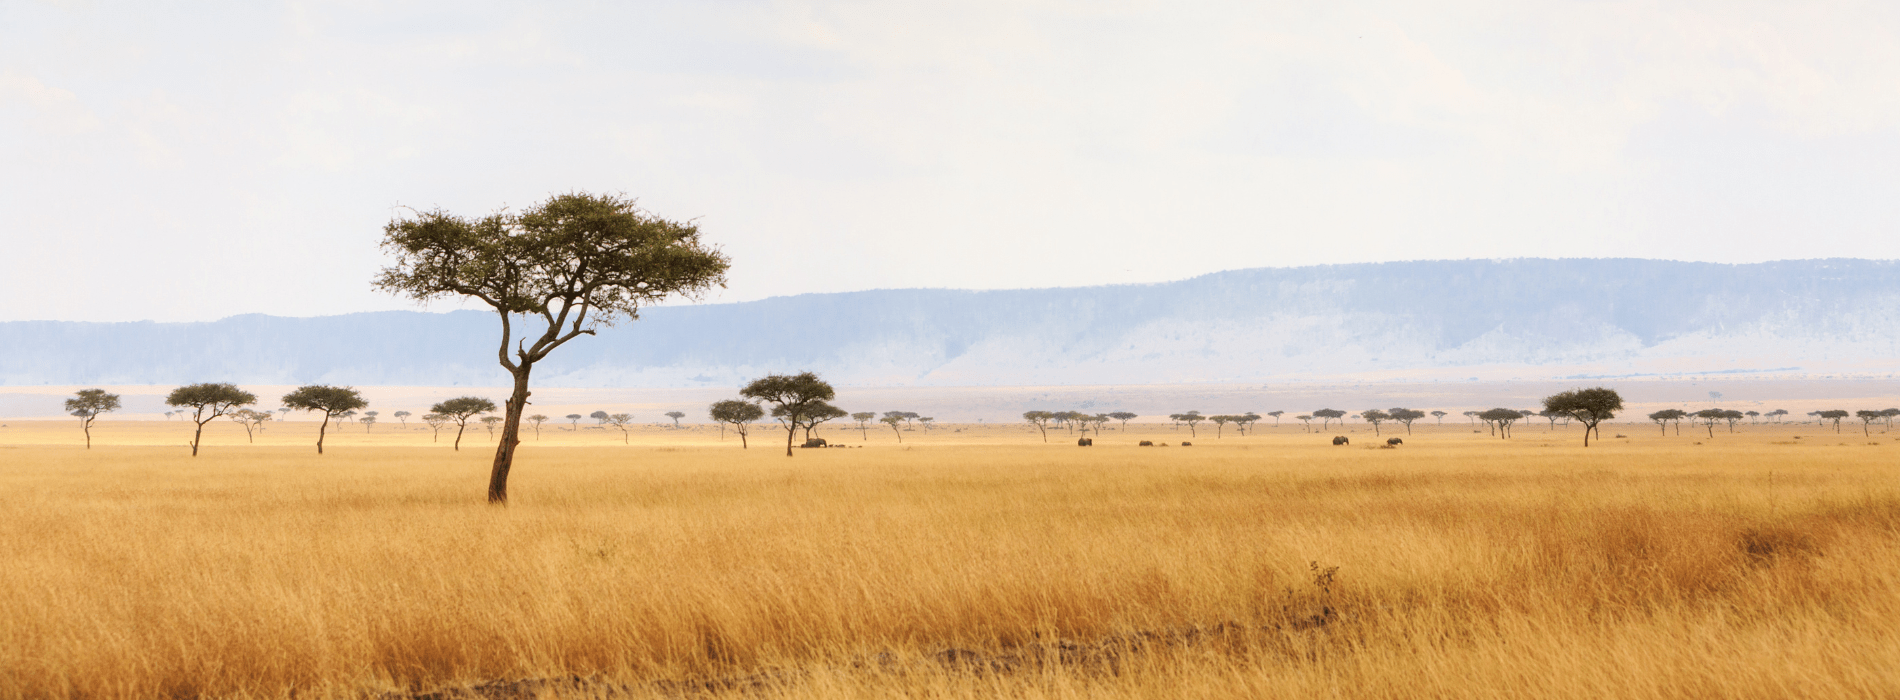 Landscape shot of hilly Kenyan savannah